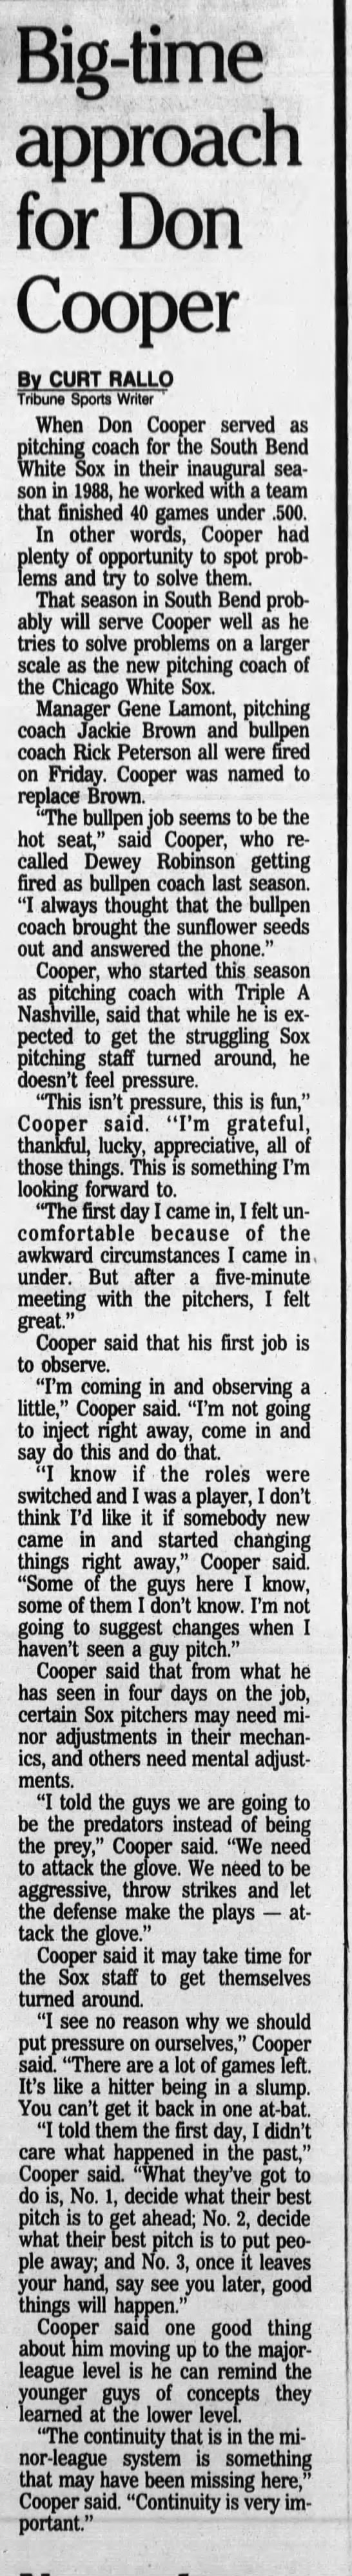 Don Cooper - June 6, 1995 - Greatest21Days.com - 